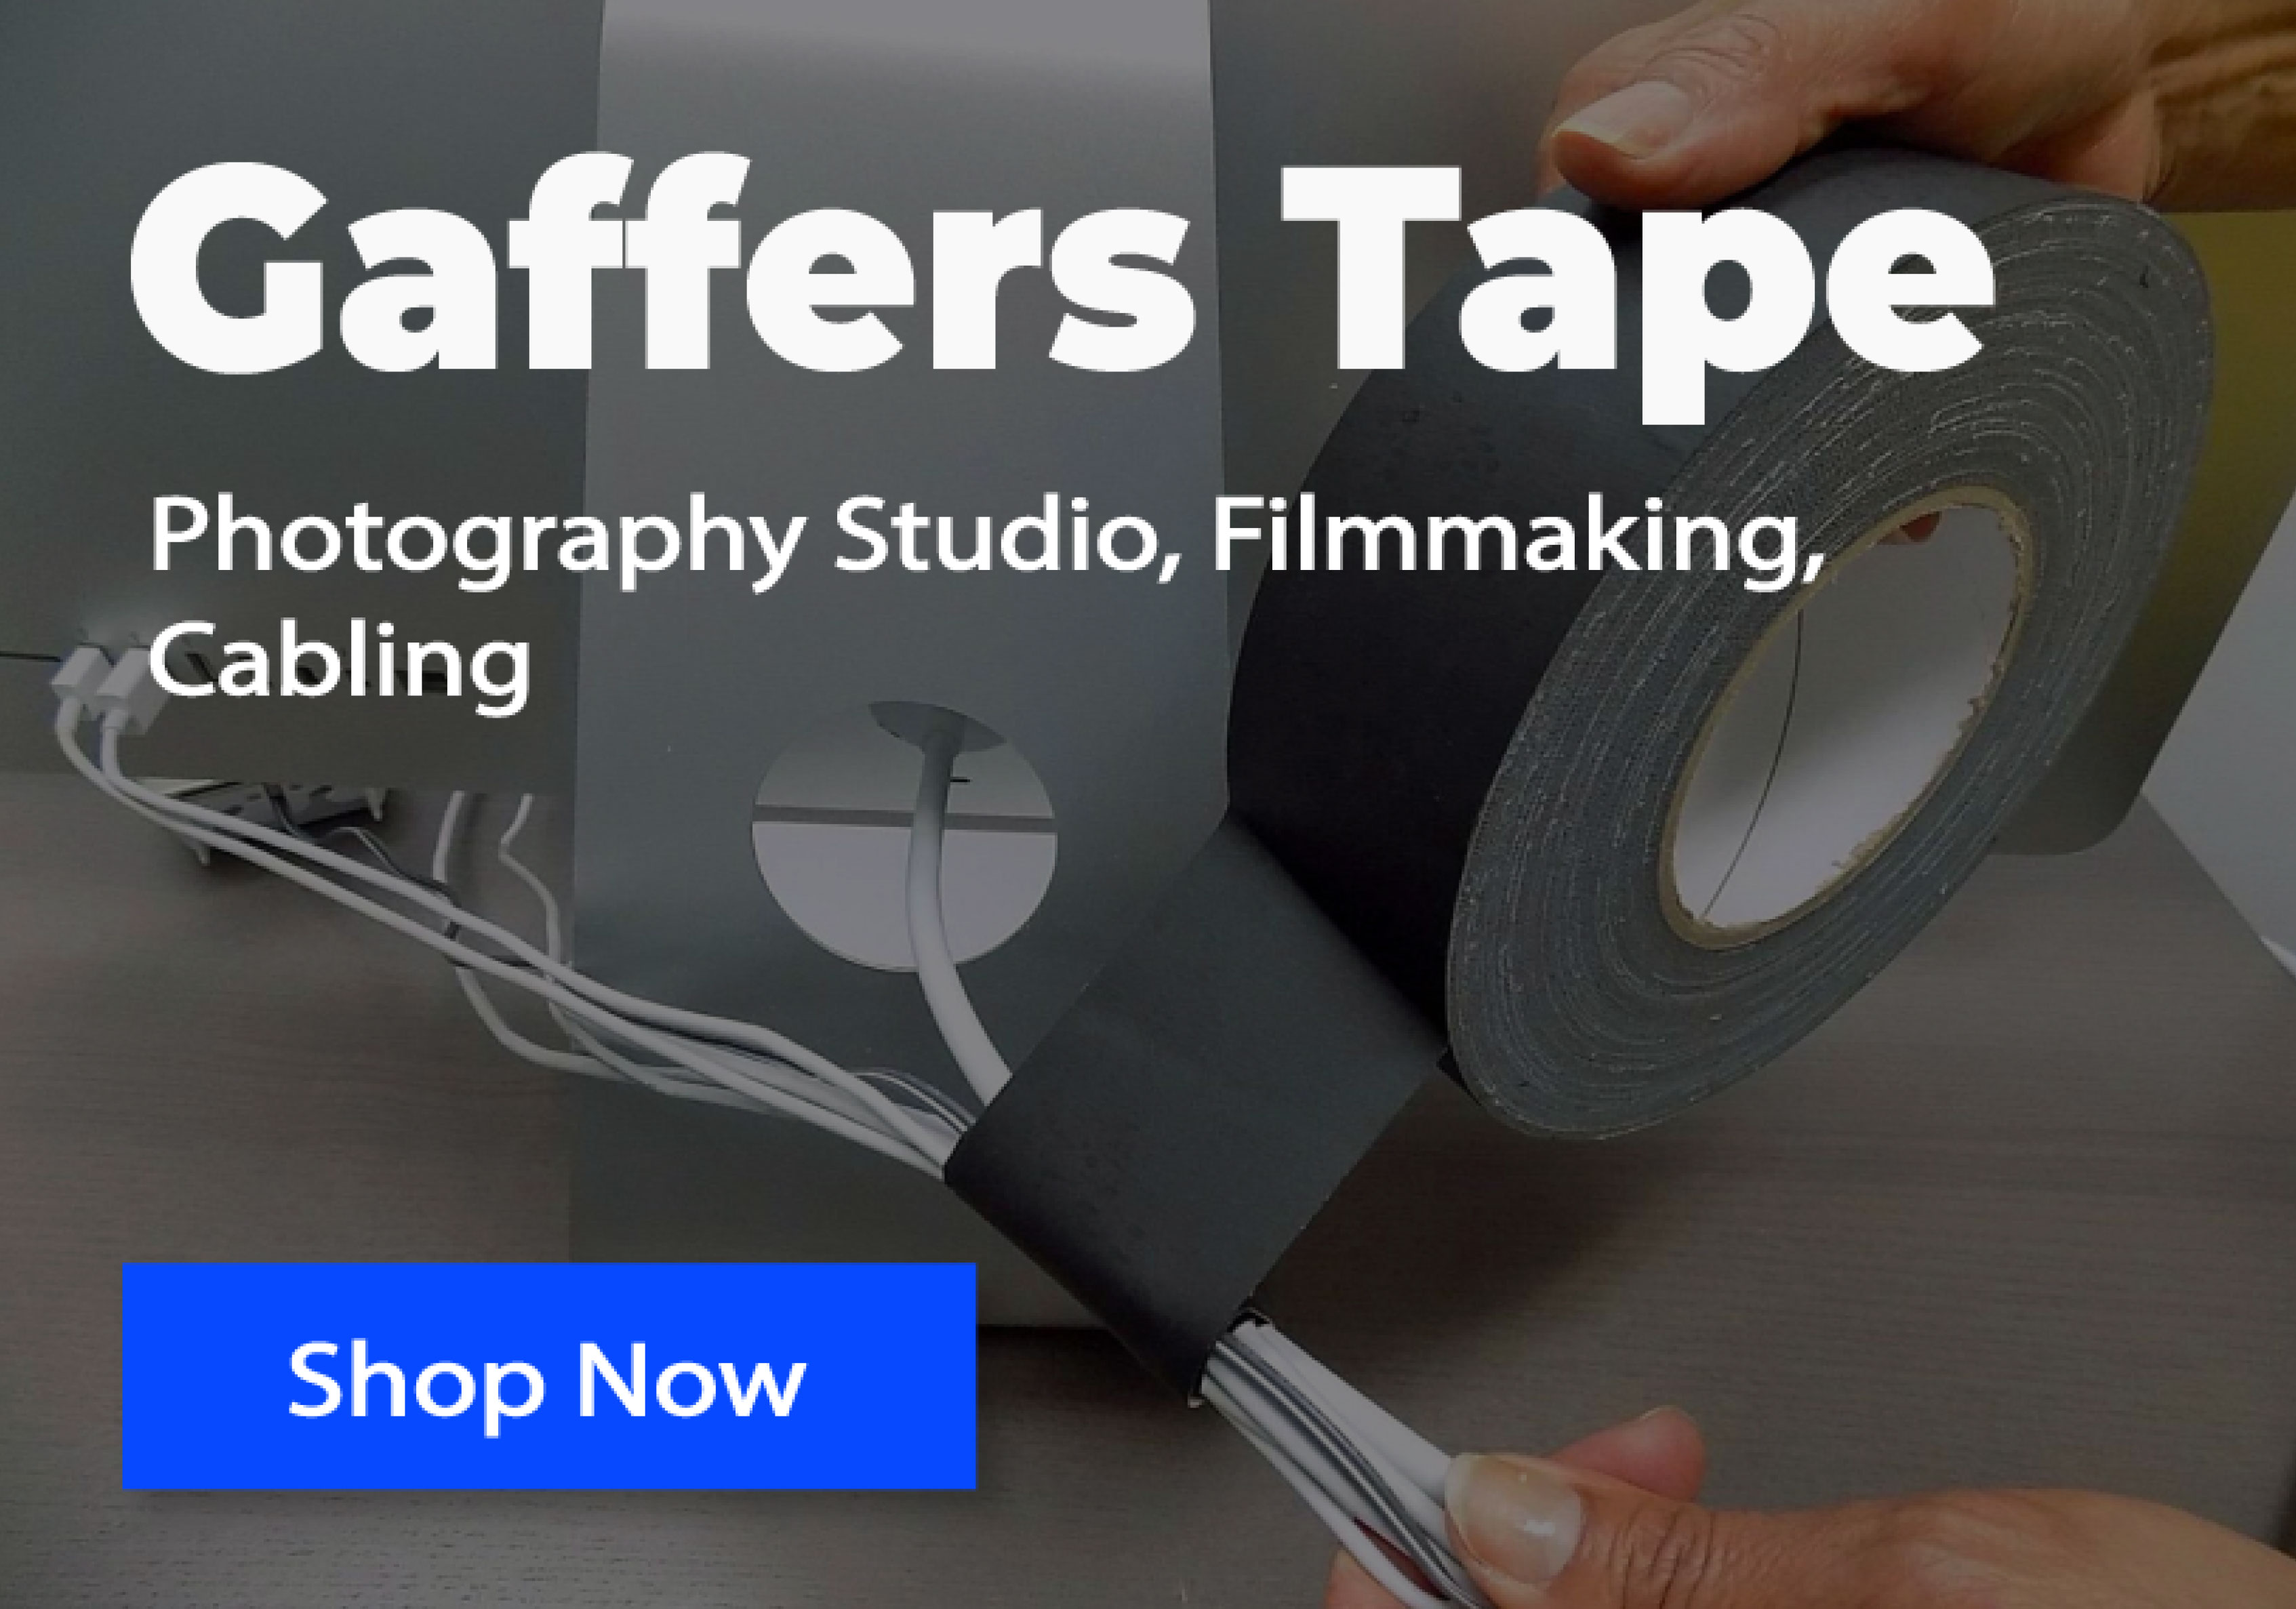 WOD ATG Tape for Scrapbookers, In Bulk - In Bulk - Distributor Tape